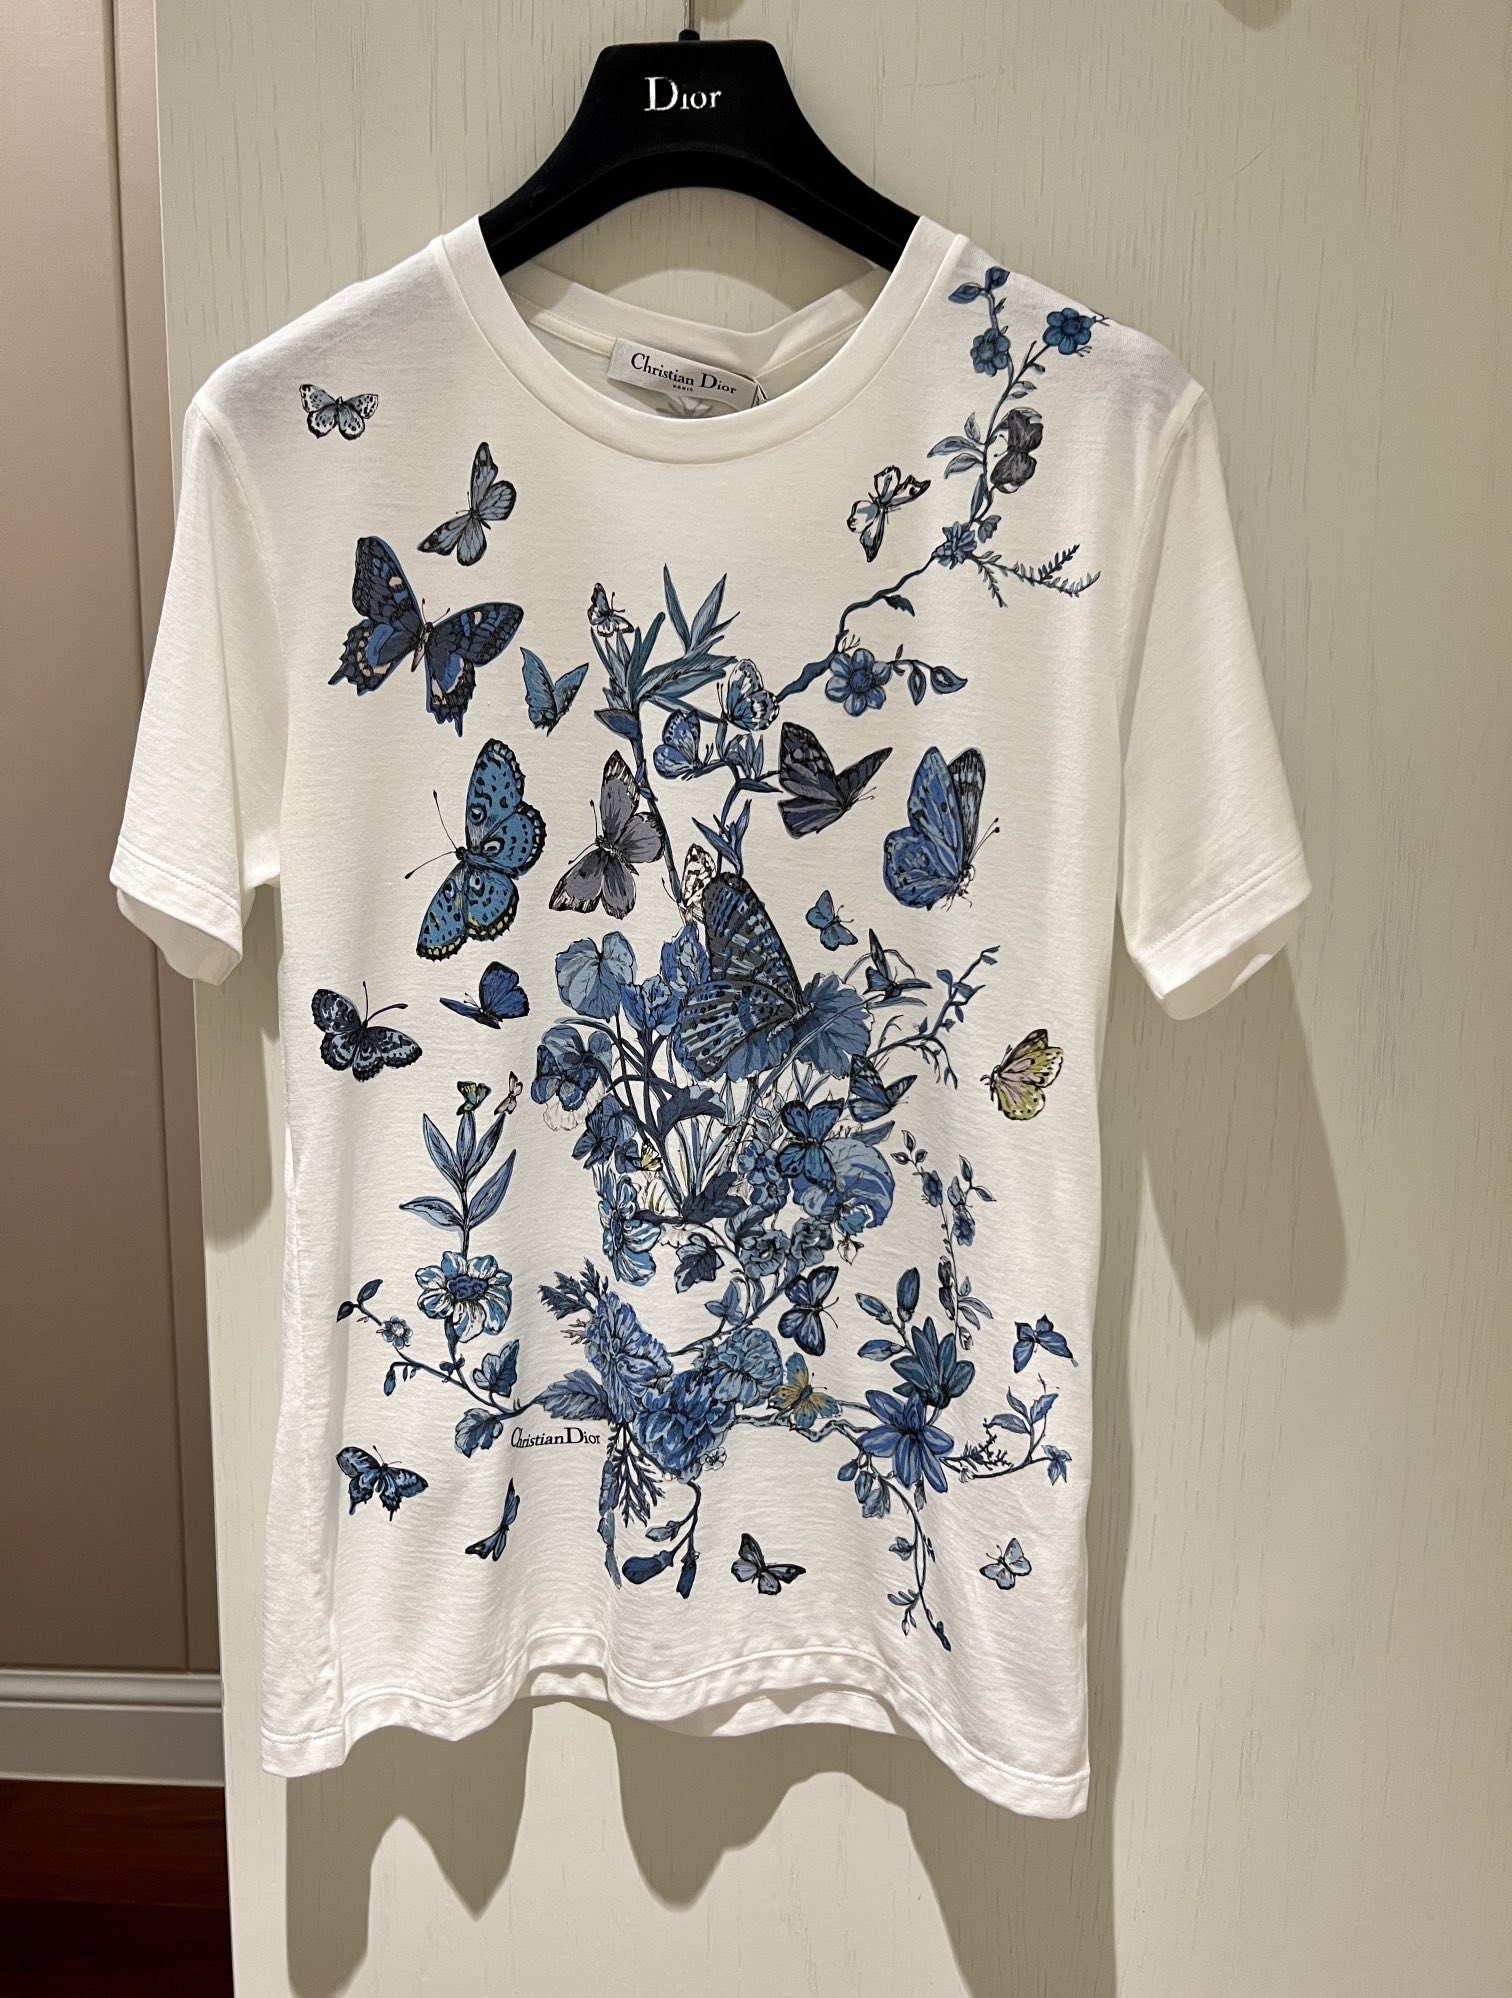 Dio* 蝴蝶图案T恤，以优雅缤纷的蓝调配色，淡雅显气质 。蝴蝶环绕 立体显相美妙风彩 ，经典圆领设计 采用纯棉面料制作 柔软细腻 夏季必备，一色三码P yldwl